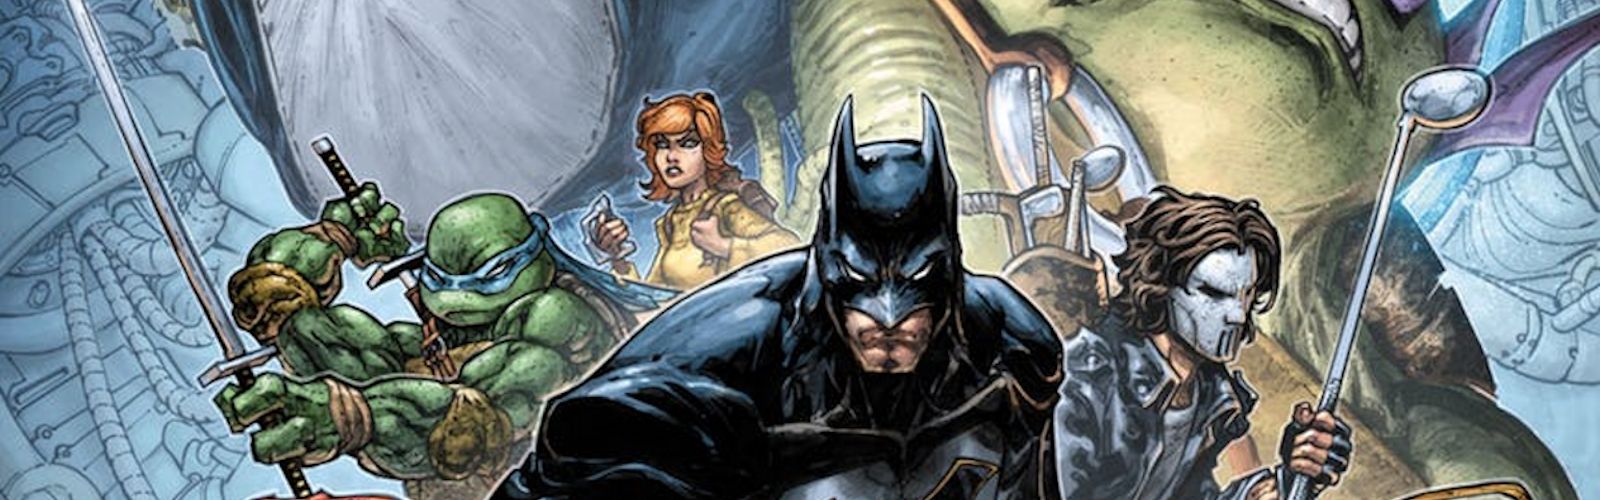 Batman vs Teenage Mutant Ninja Turtles' Biggest Changes From Comic to Film